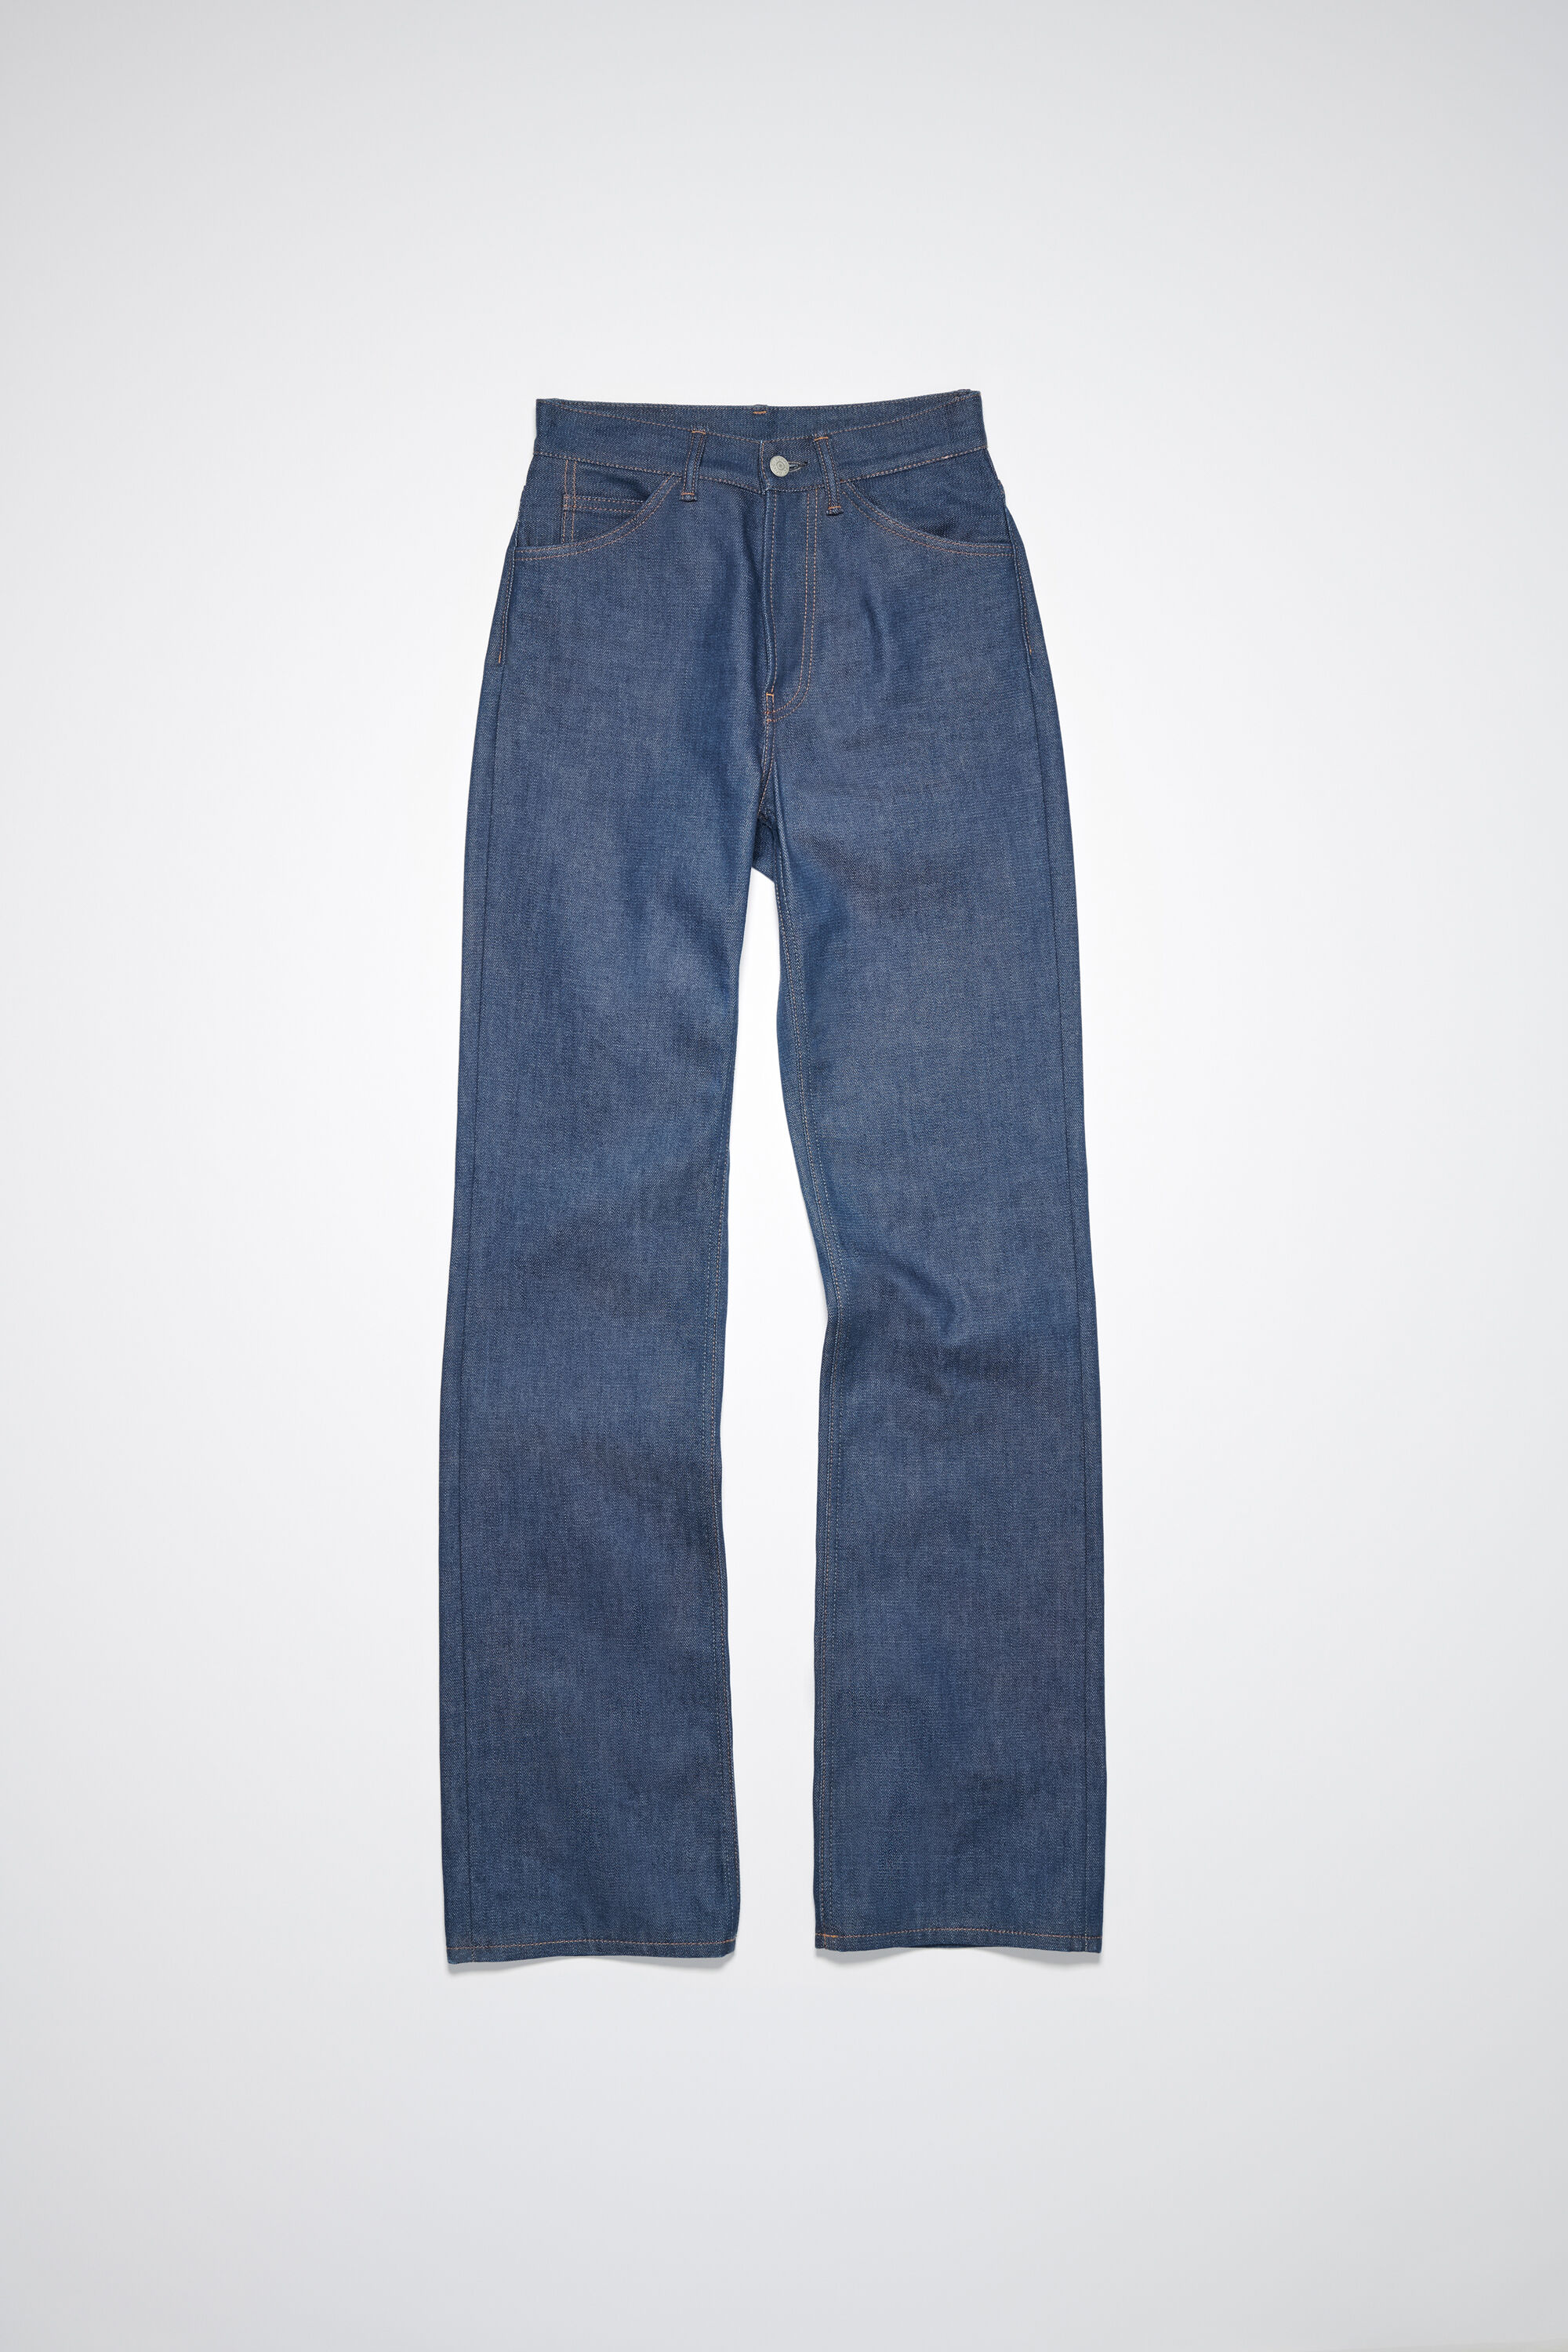 Acne Studios - Regular fit jeans - 1977 - Mid Blue